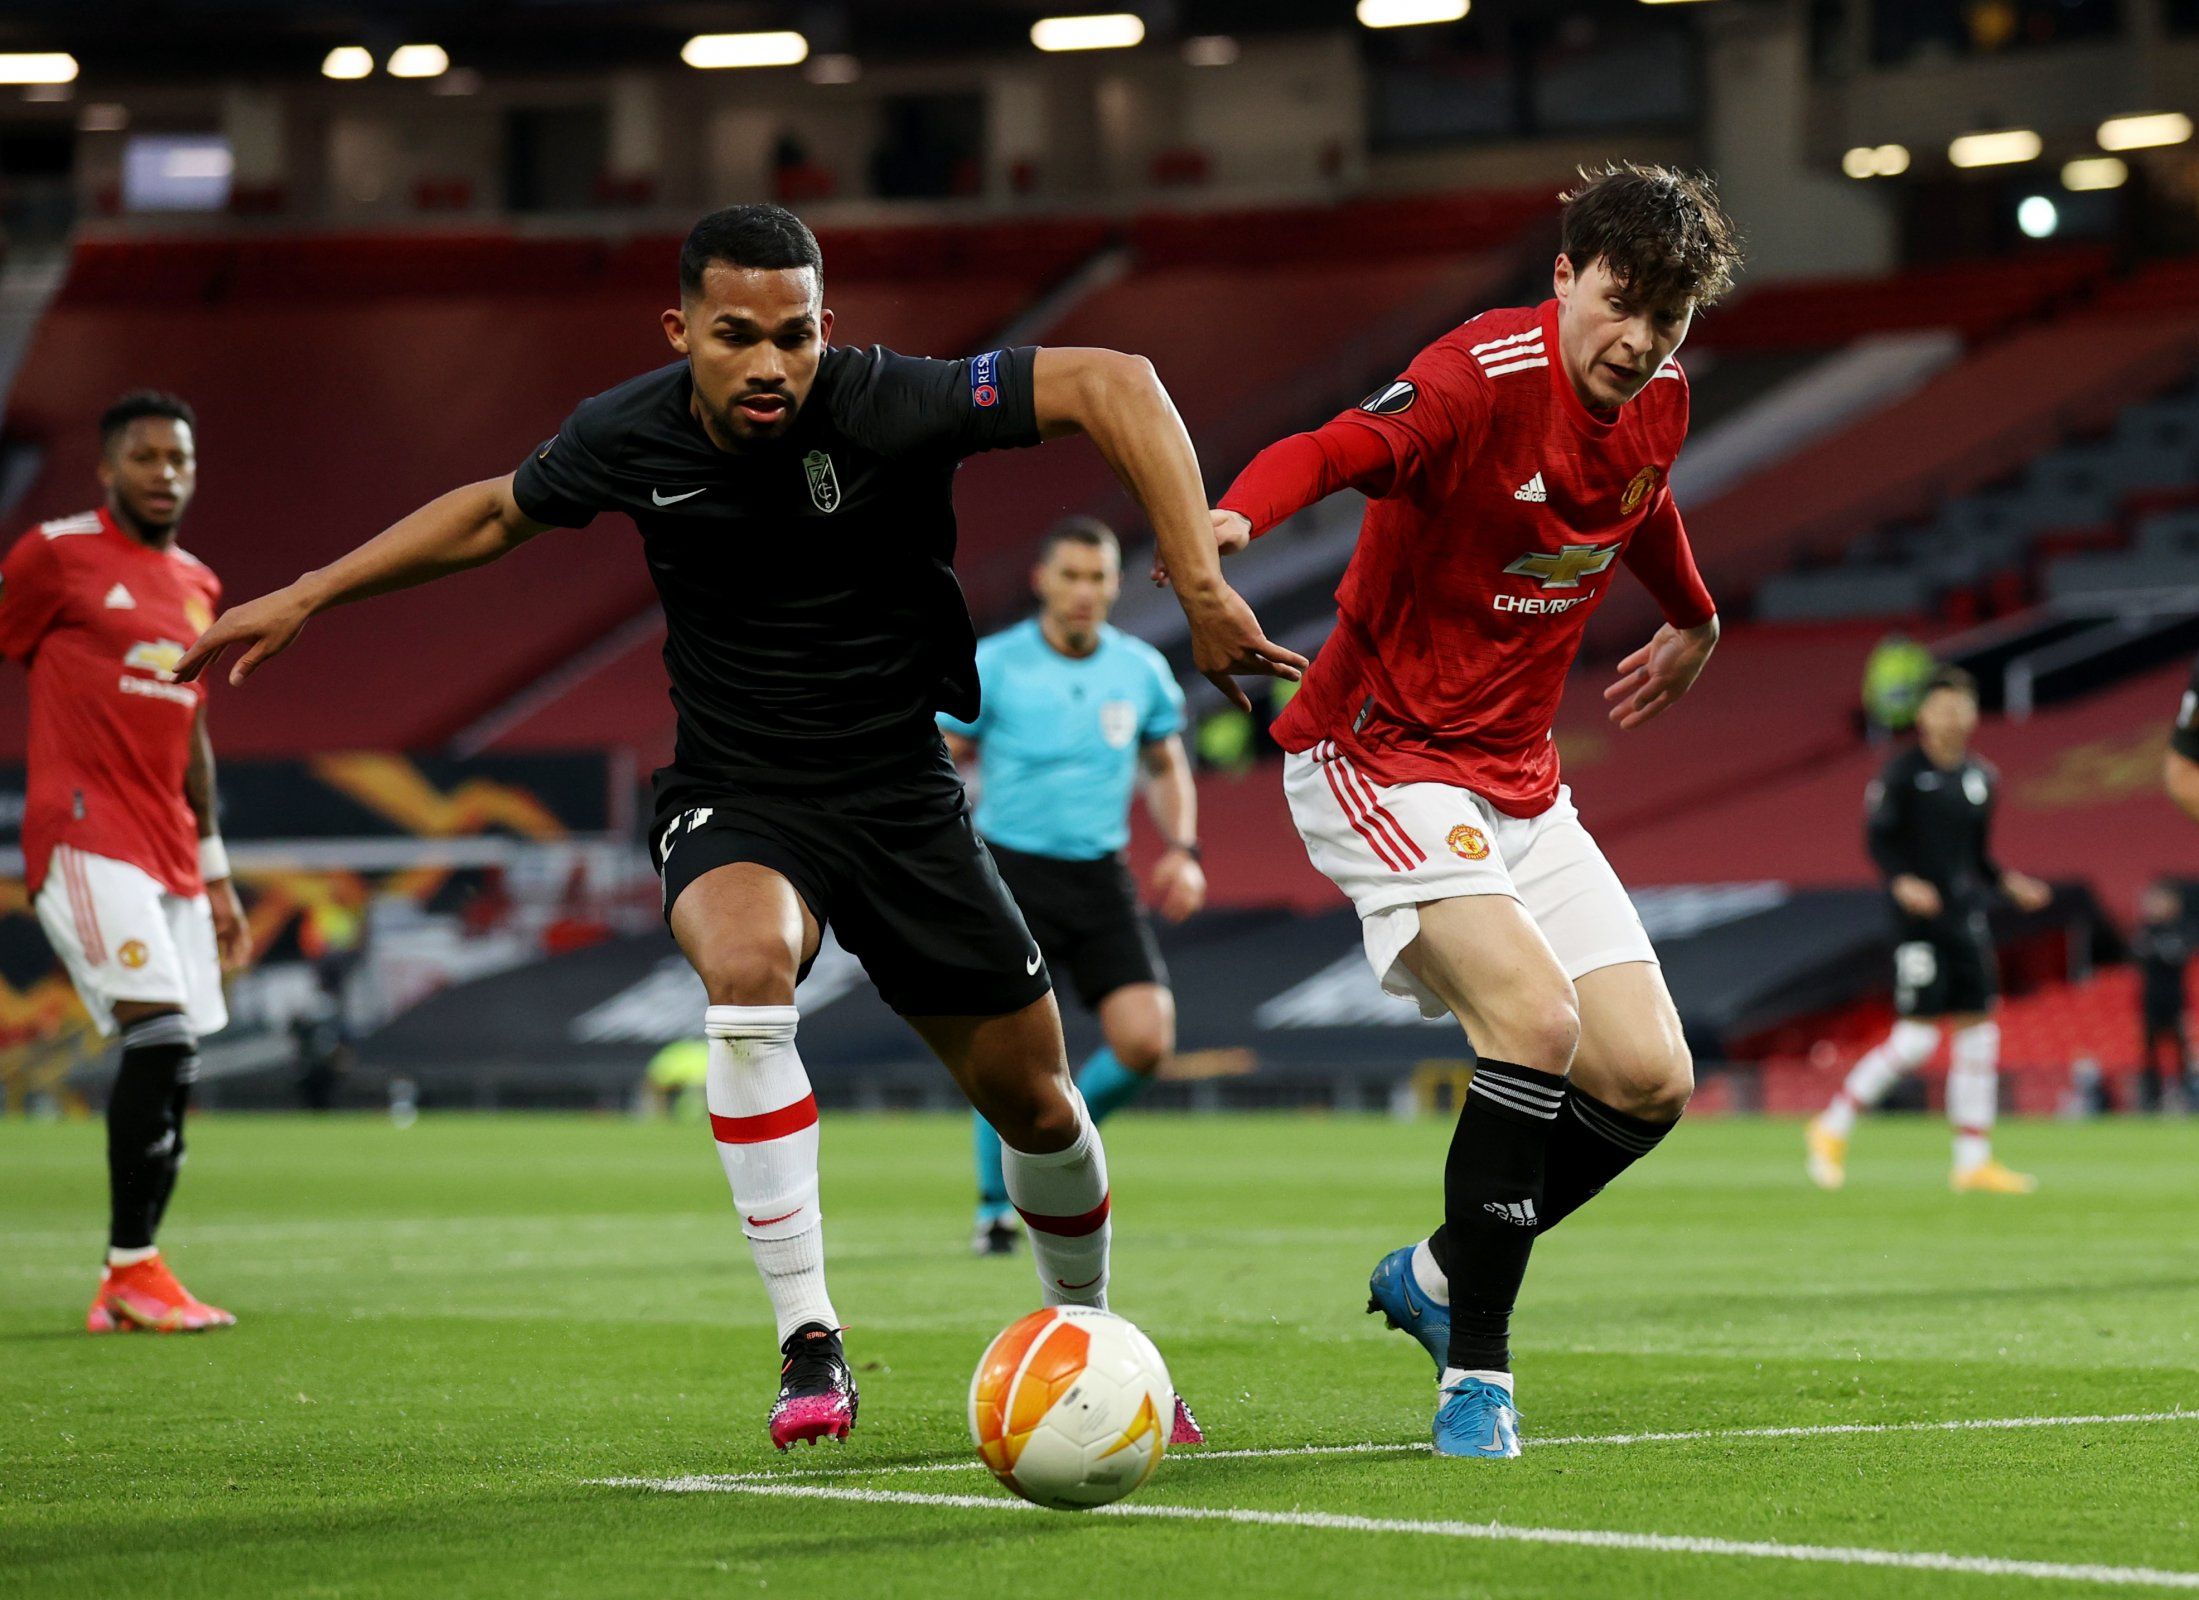 Granada's Yangel Herrera in Europa League - Quarter Final action with Manchester United's Victor Lindelof